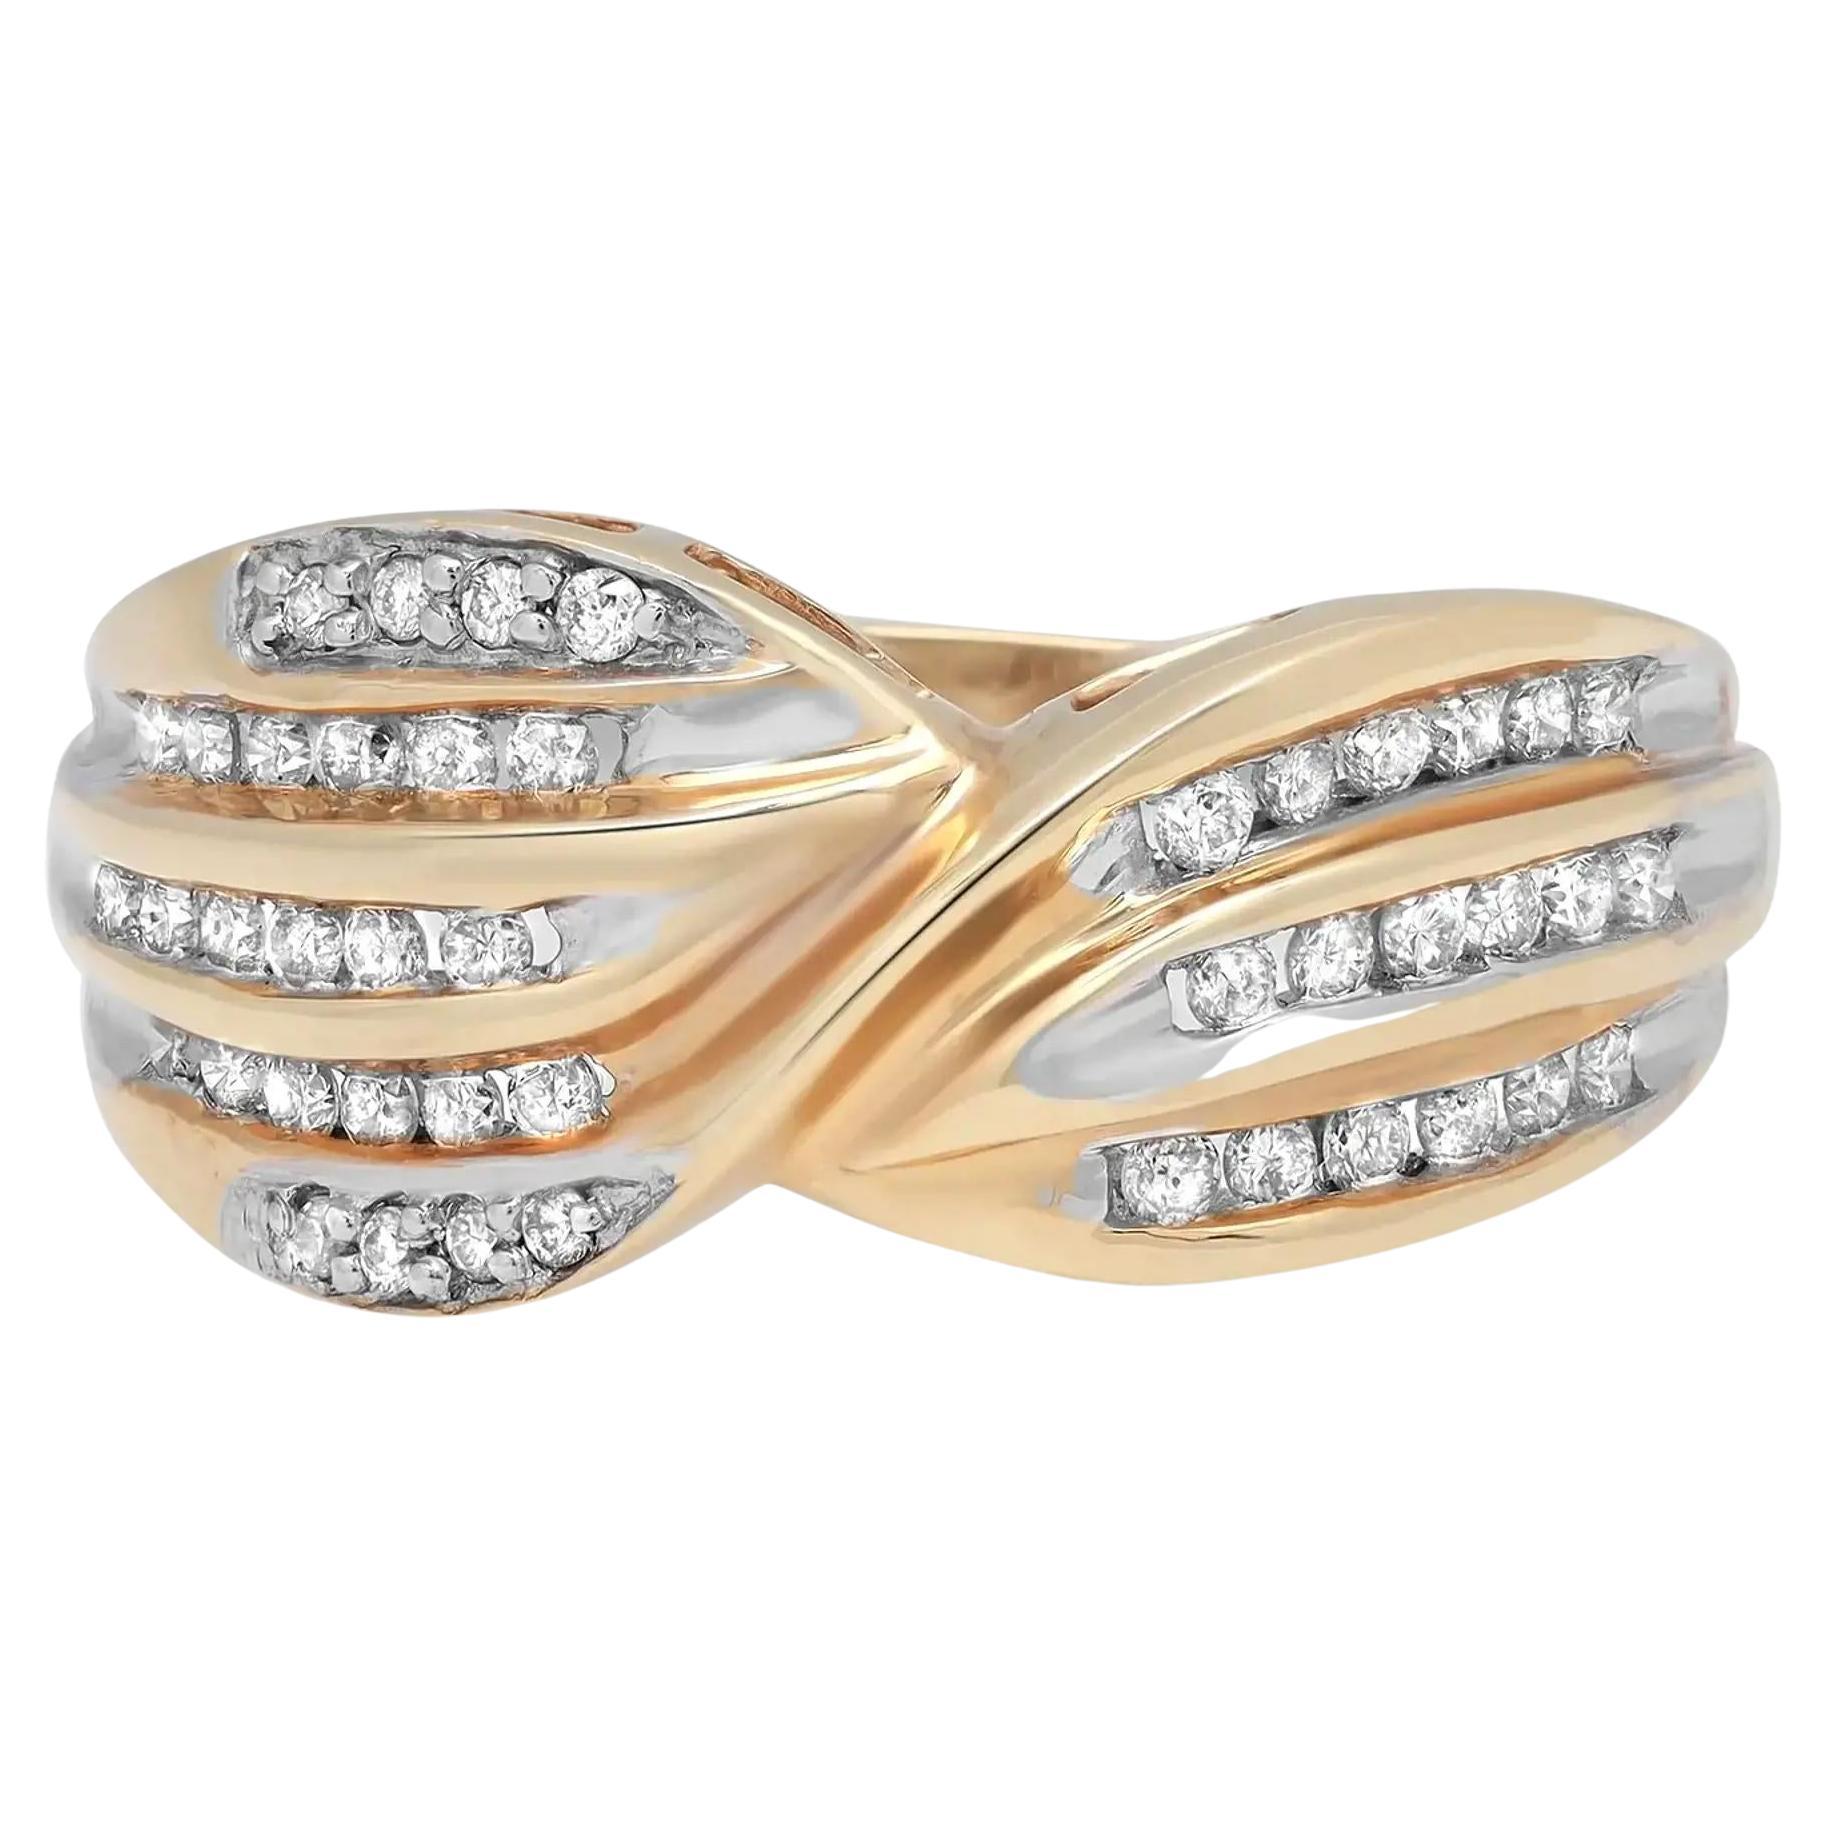 0.39 Carat Round Cut Diamond Ladies Ring 14k Yellow Gold For Sale